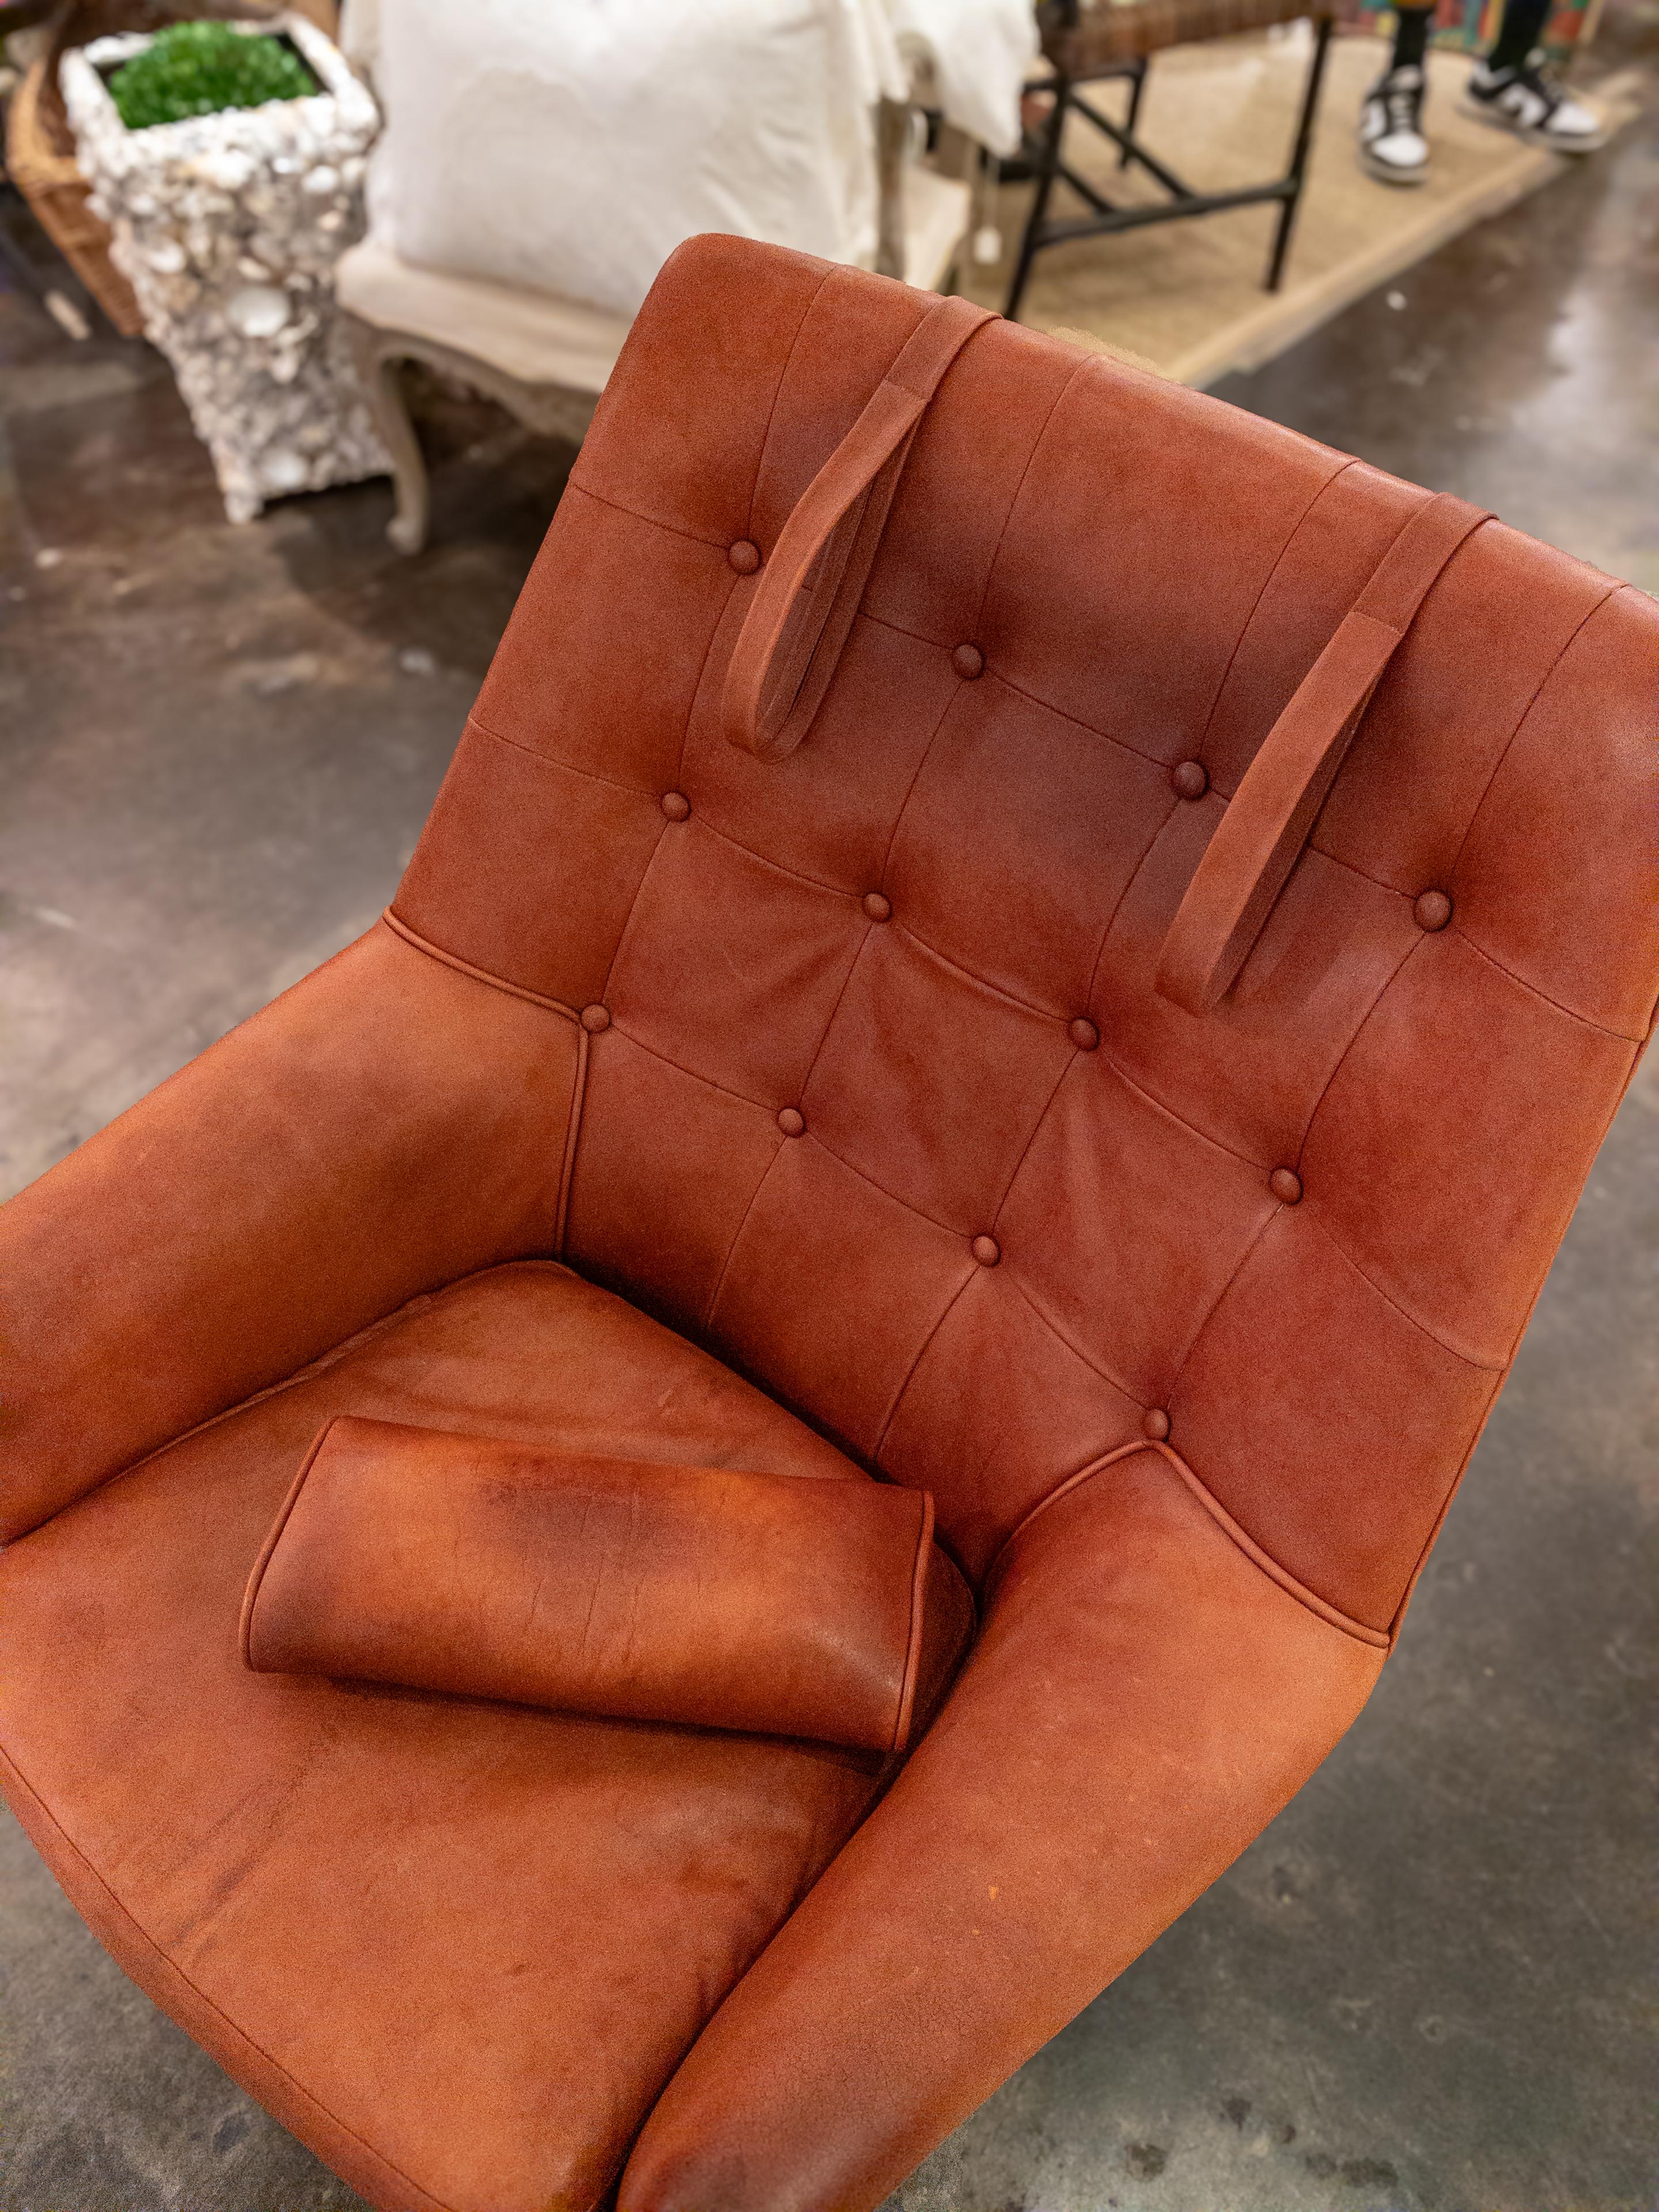 Tove & Edvard Kindt-Larsen Leather Lounge Chair For Sale 4